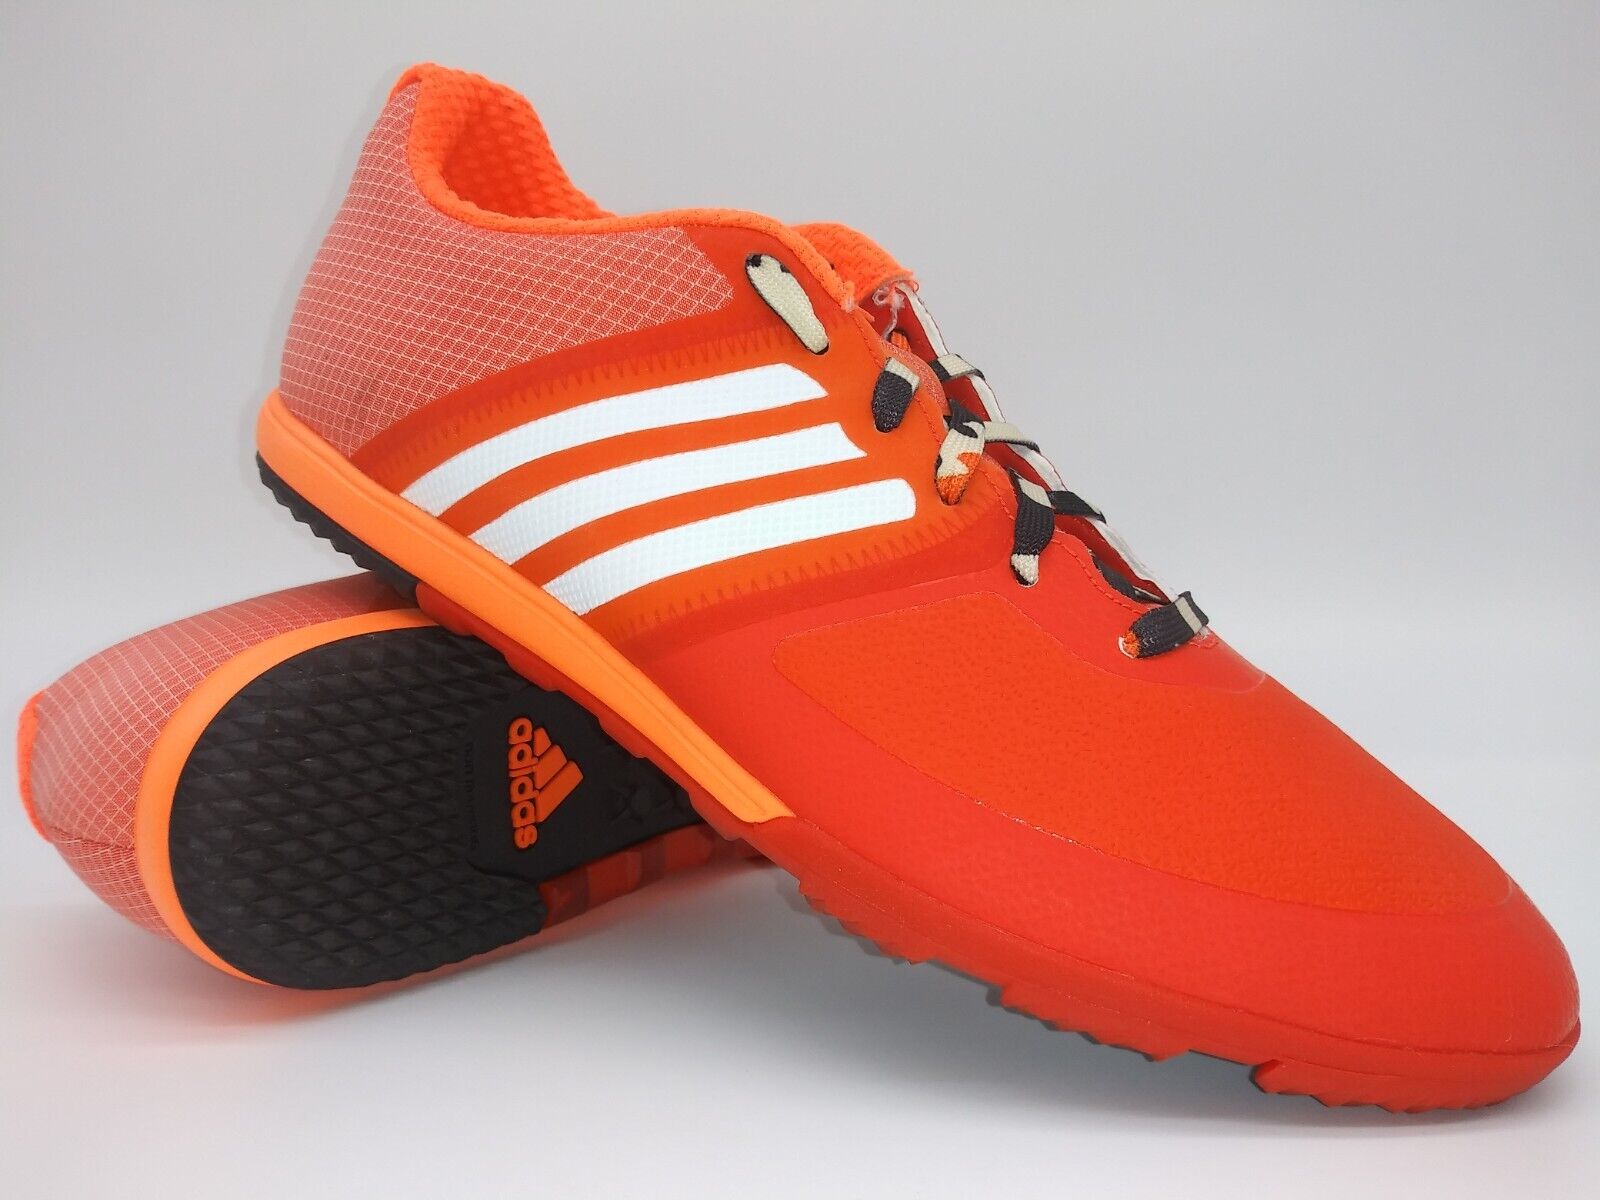 Adidas 15.1 CG Orange Villegas Footwear